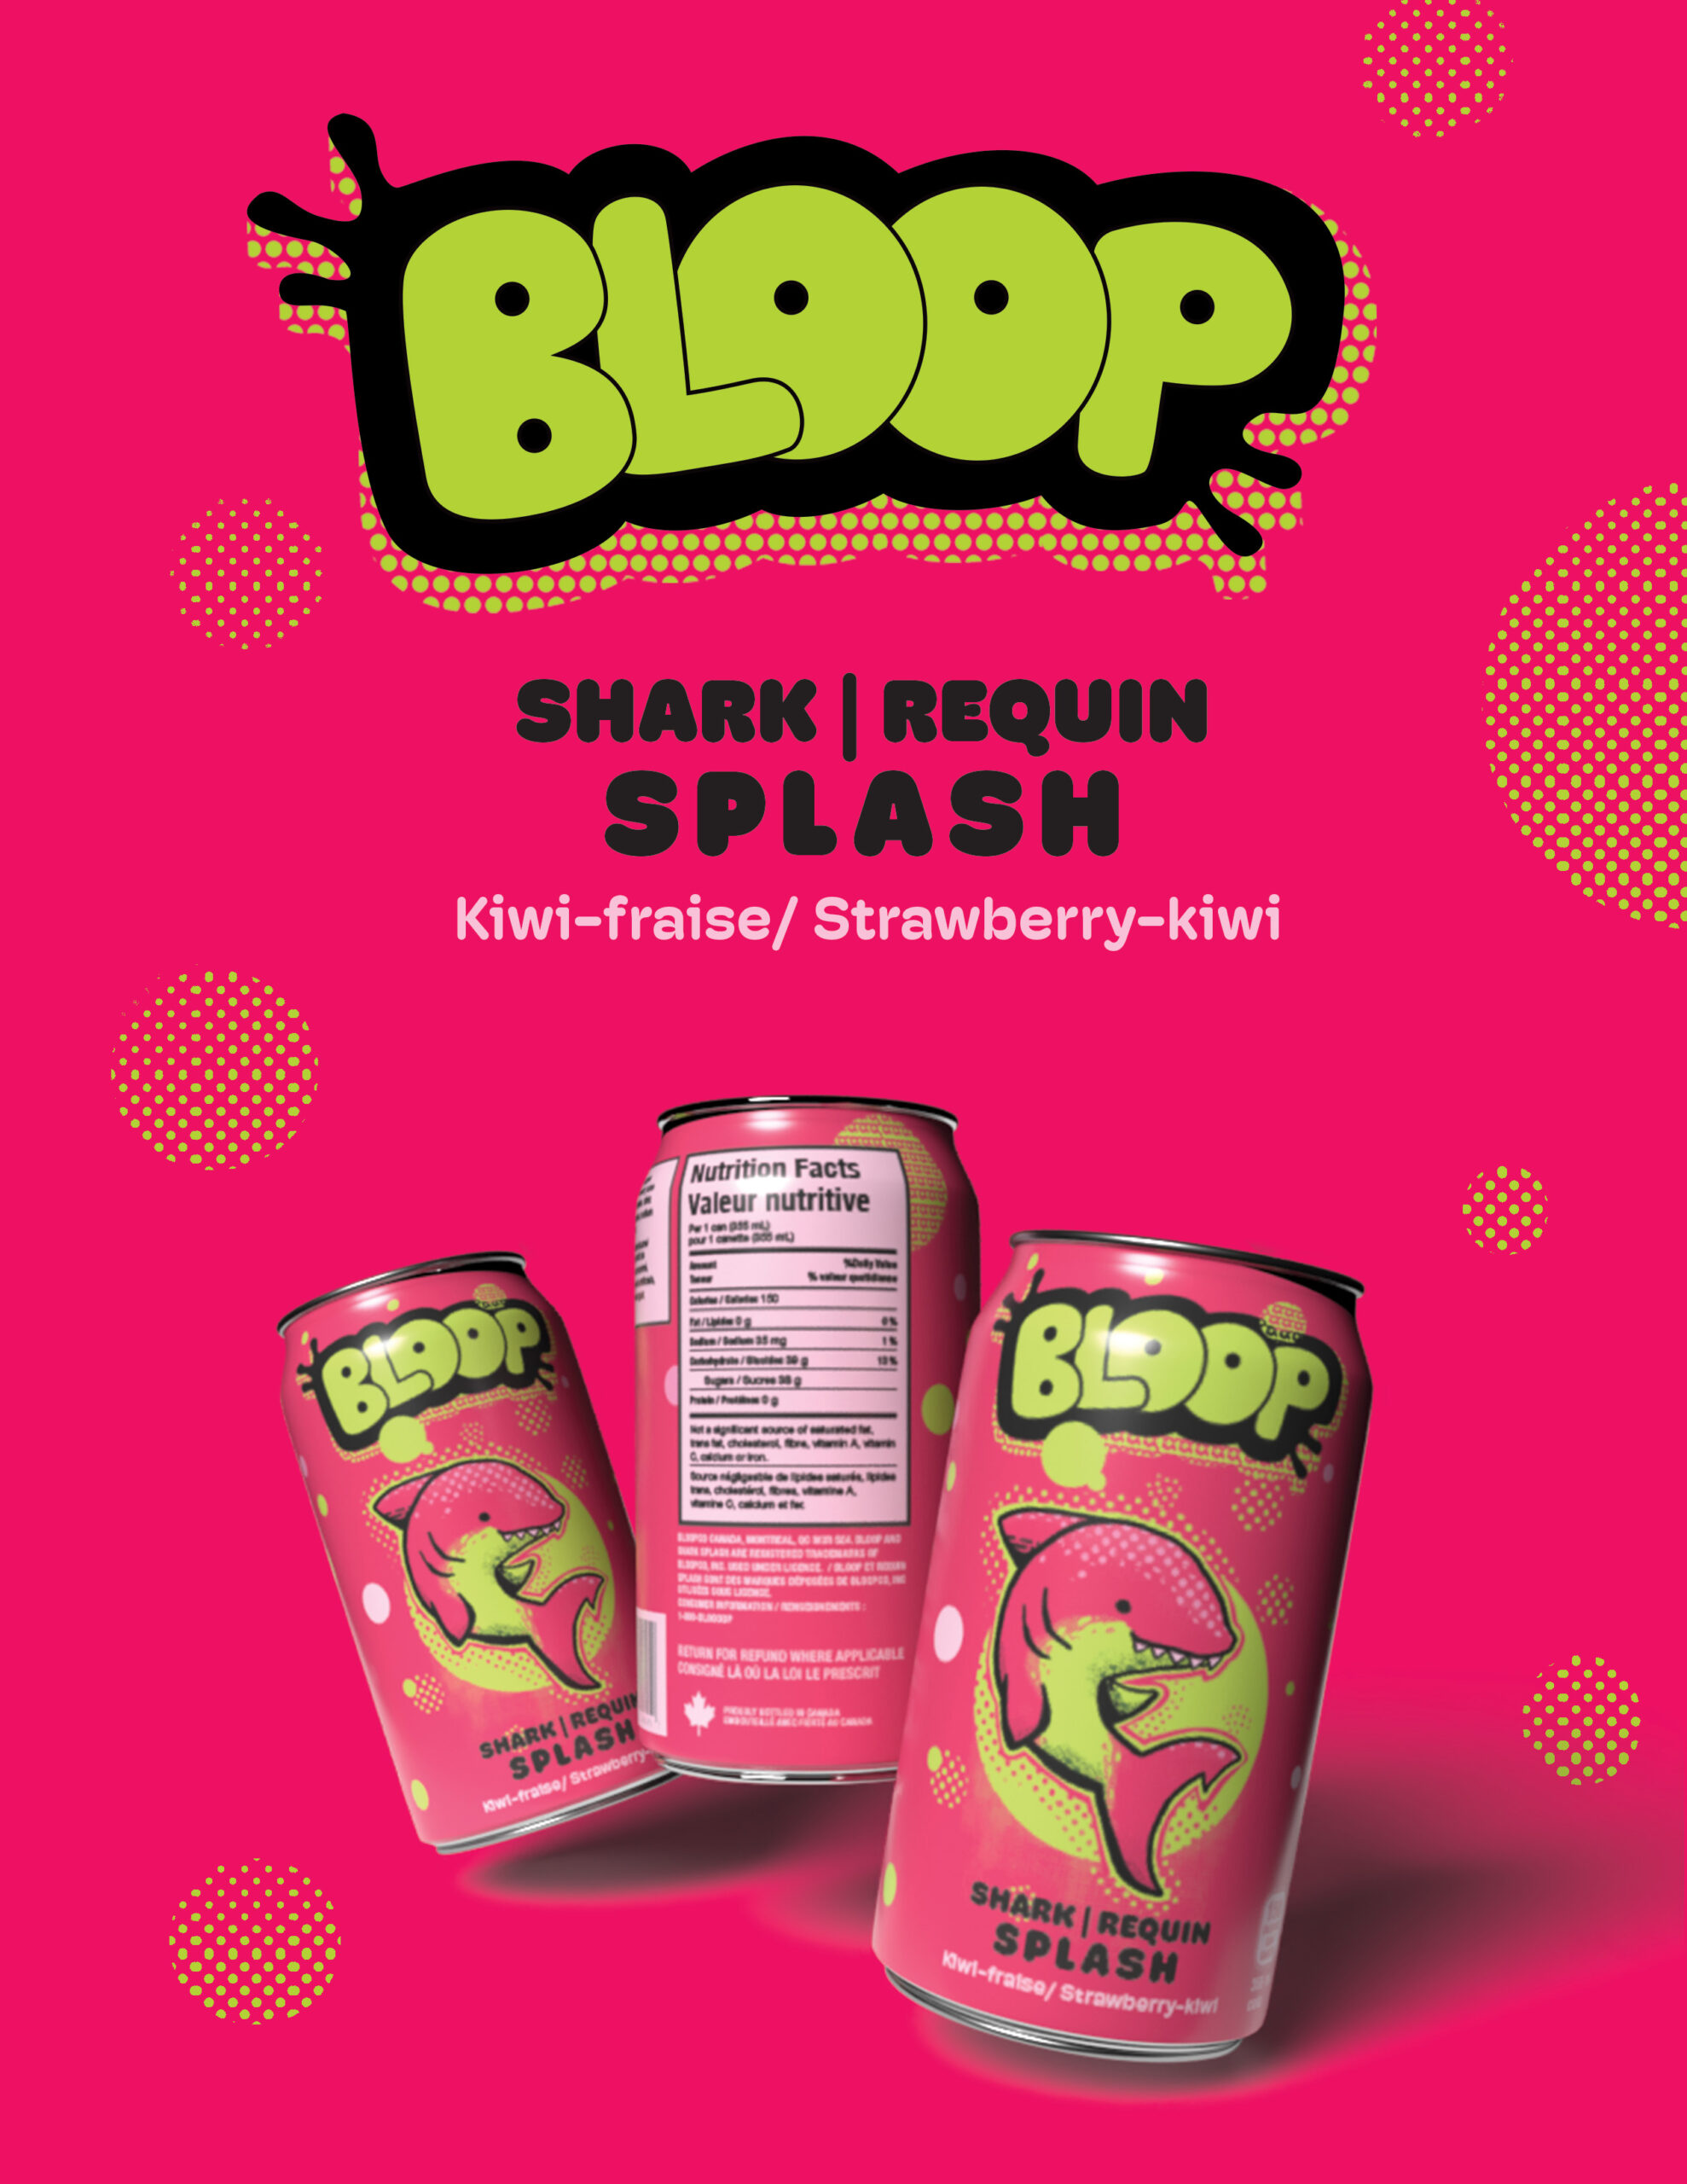 Shark splash Strawberry-kiwi drink